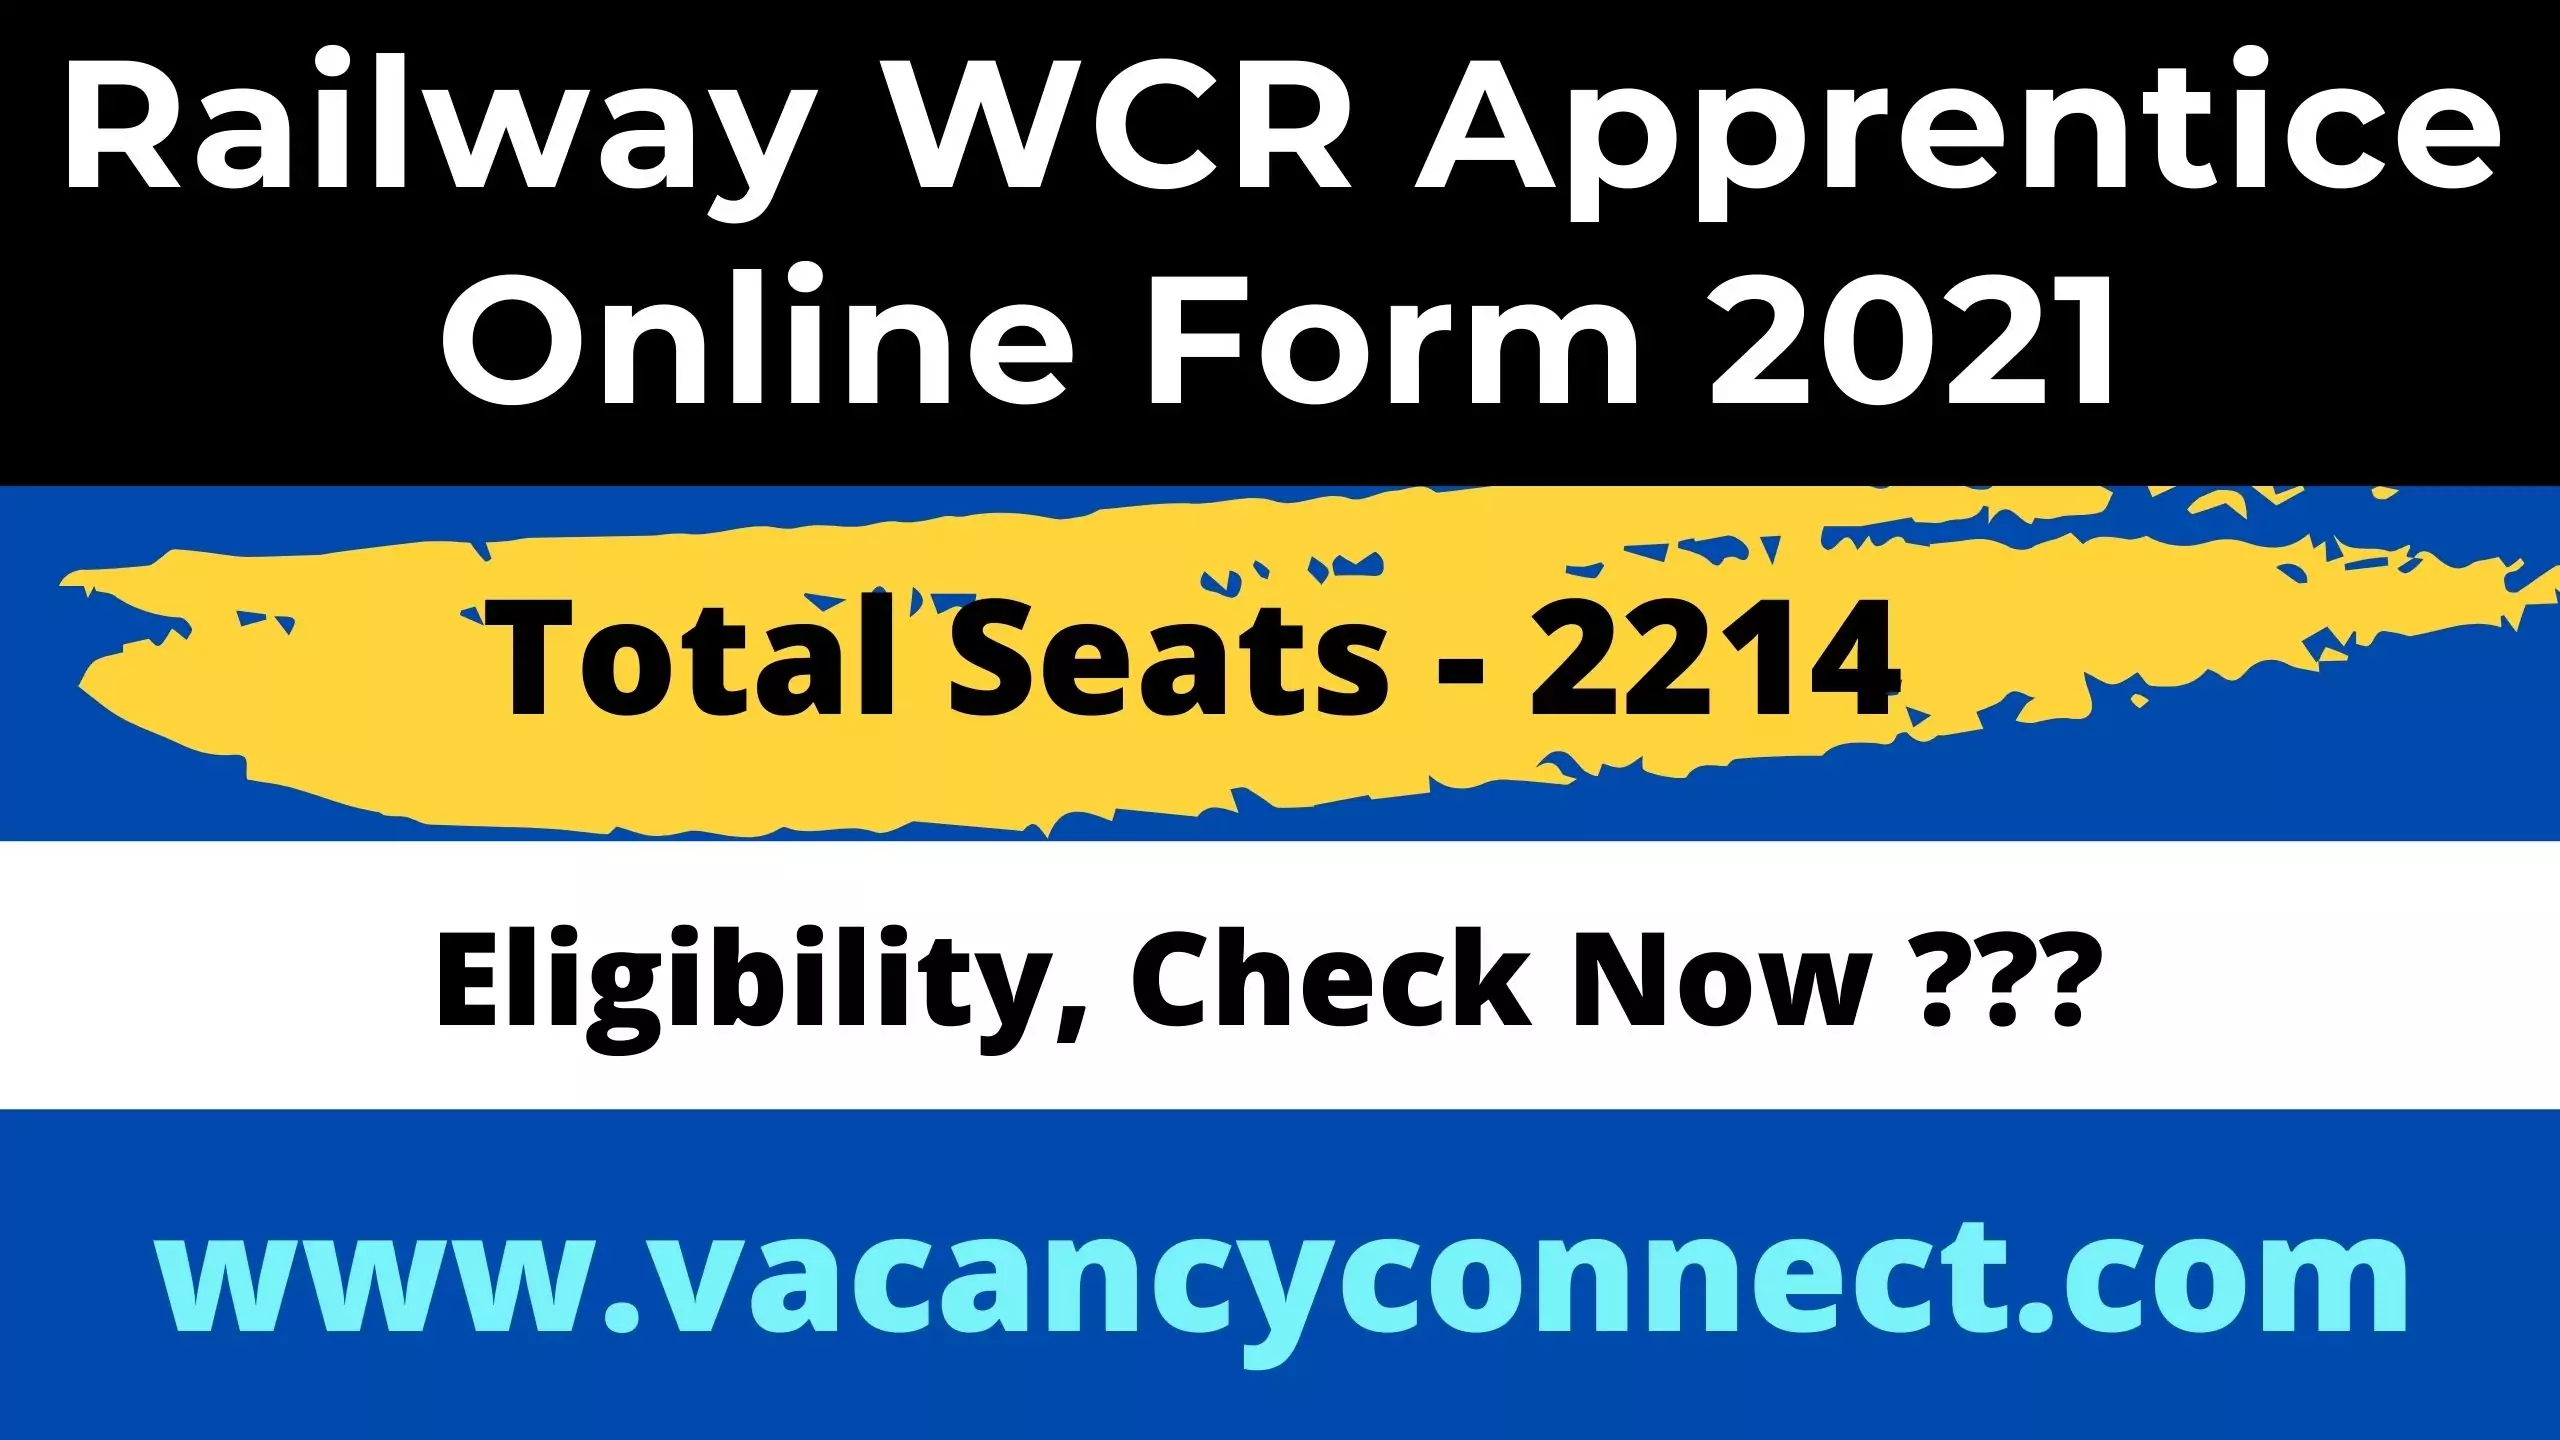 Railway WCR Apprentice Online Form 2021